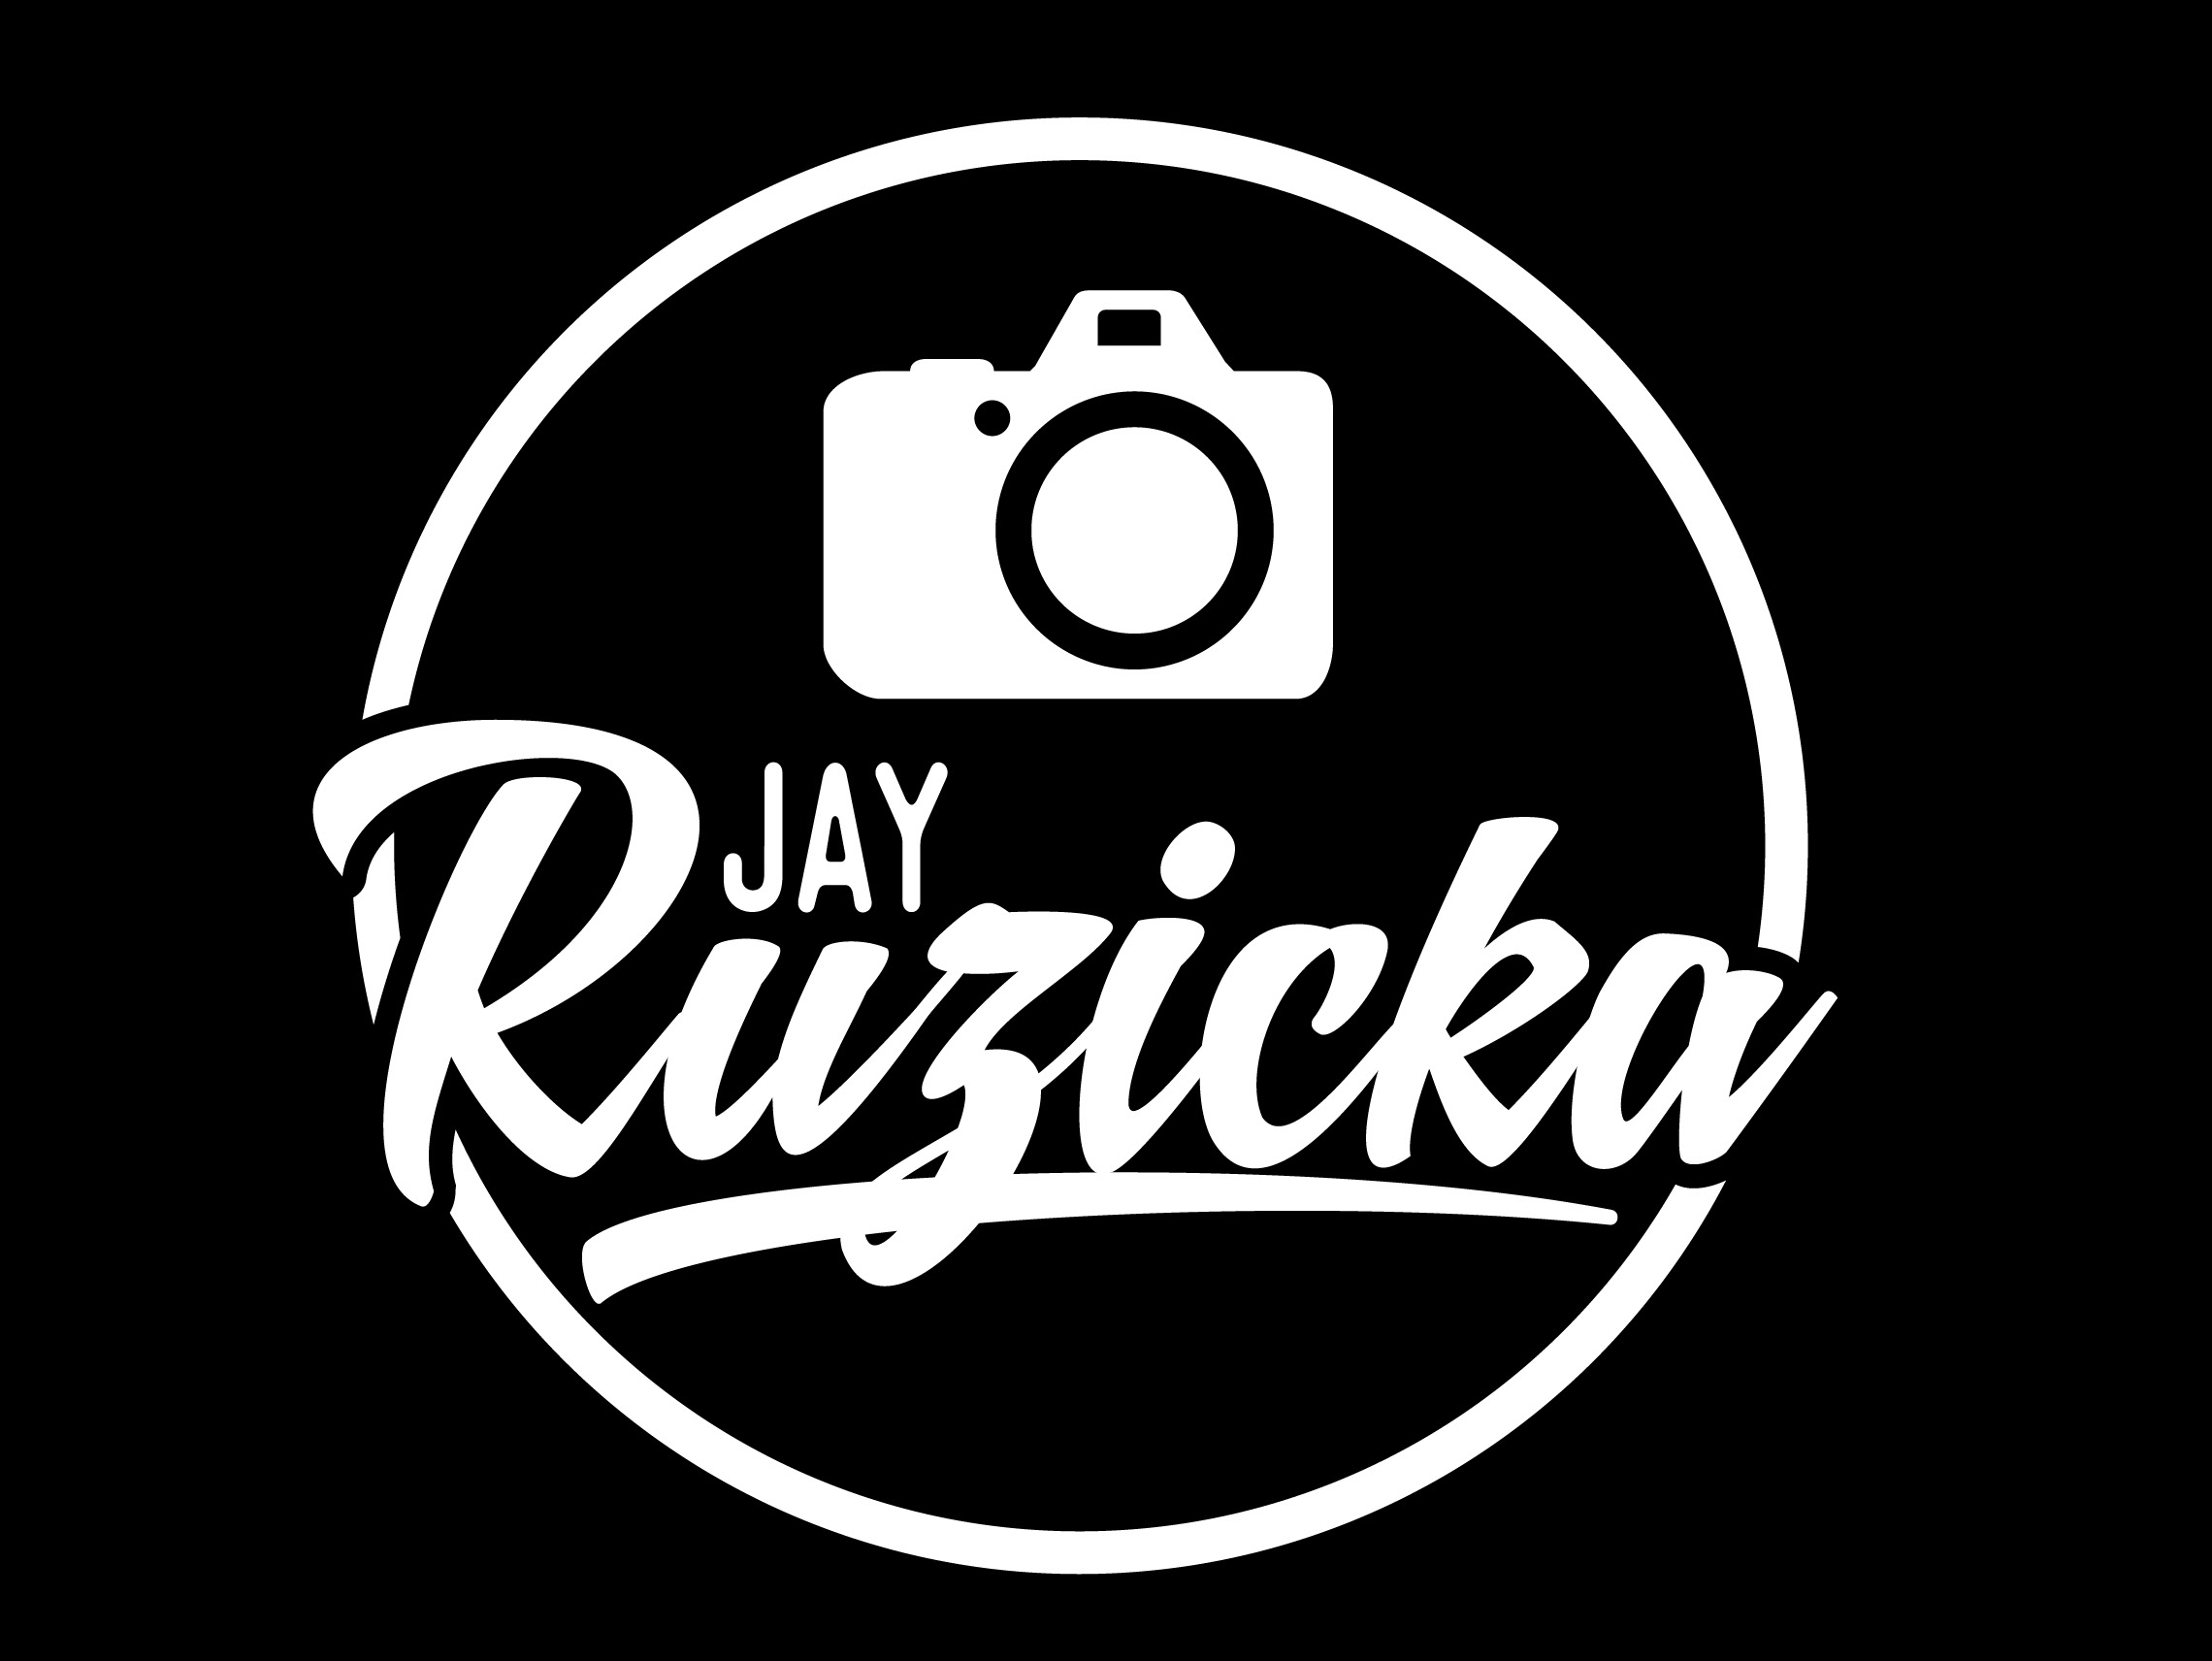 Jay Ruzicka